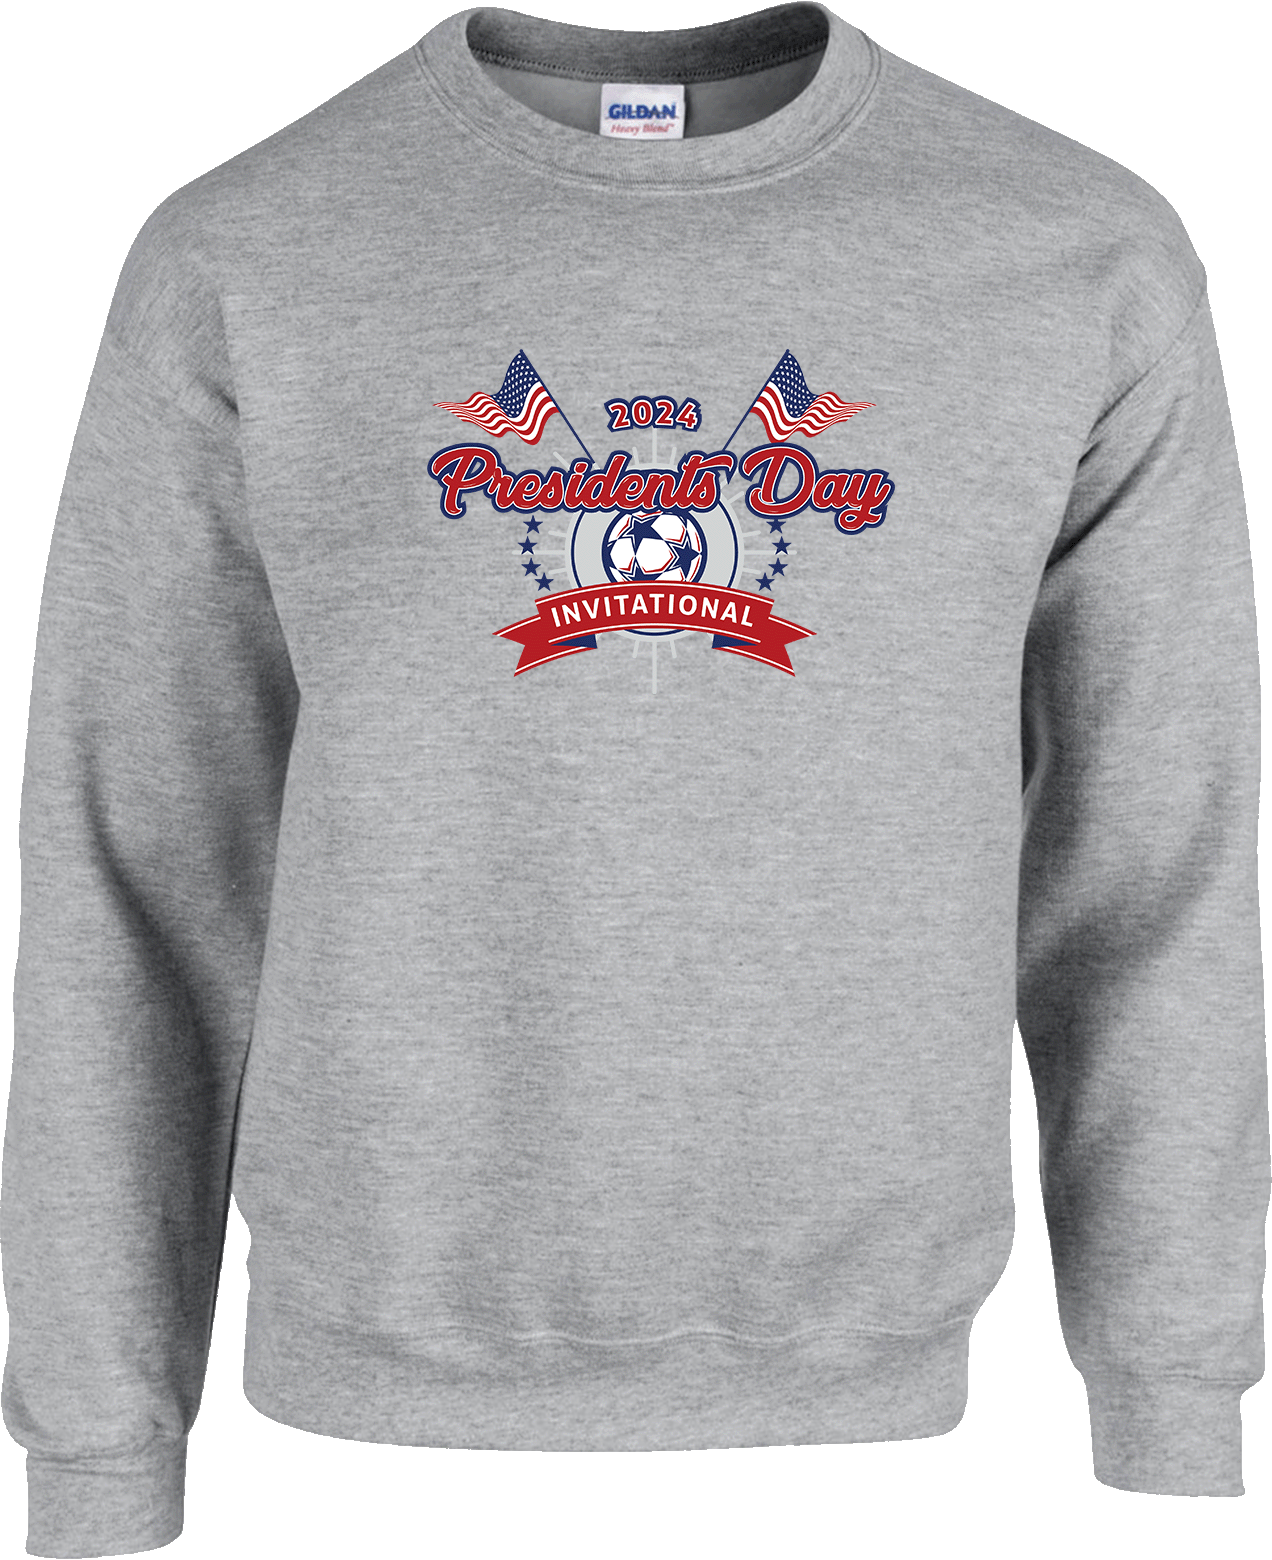 Crew Sweatershirt - 2024 Presidents Day Invitational